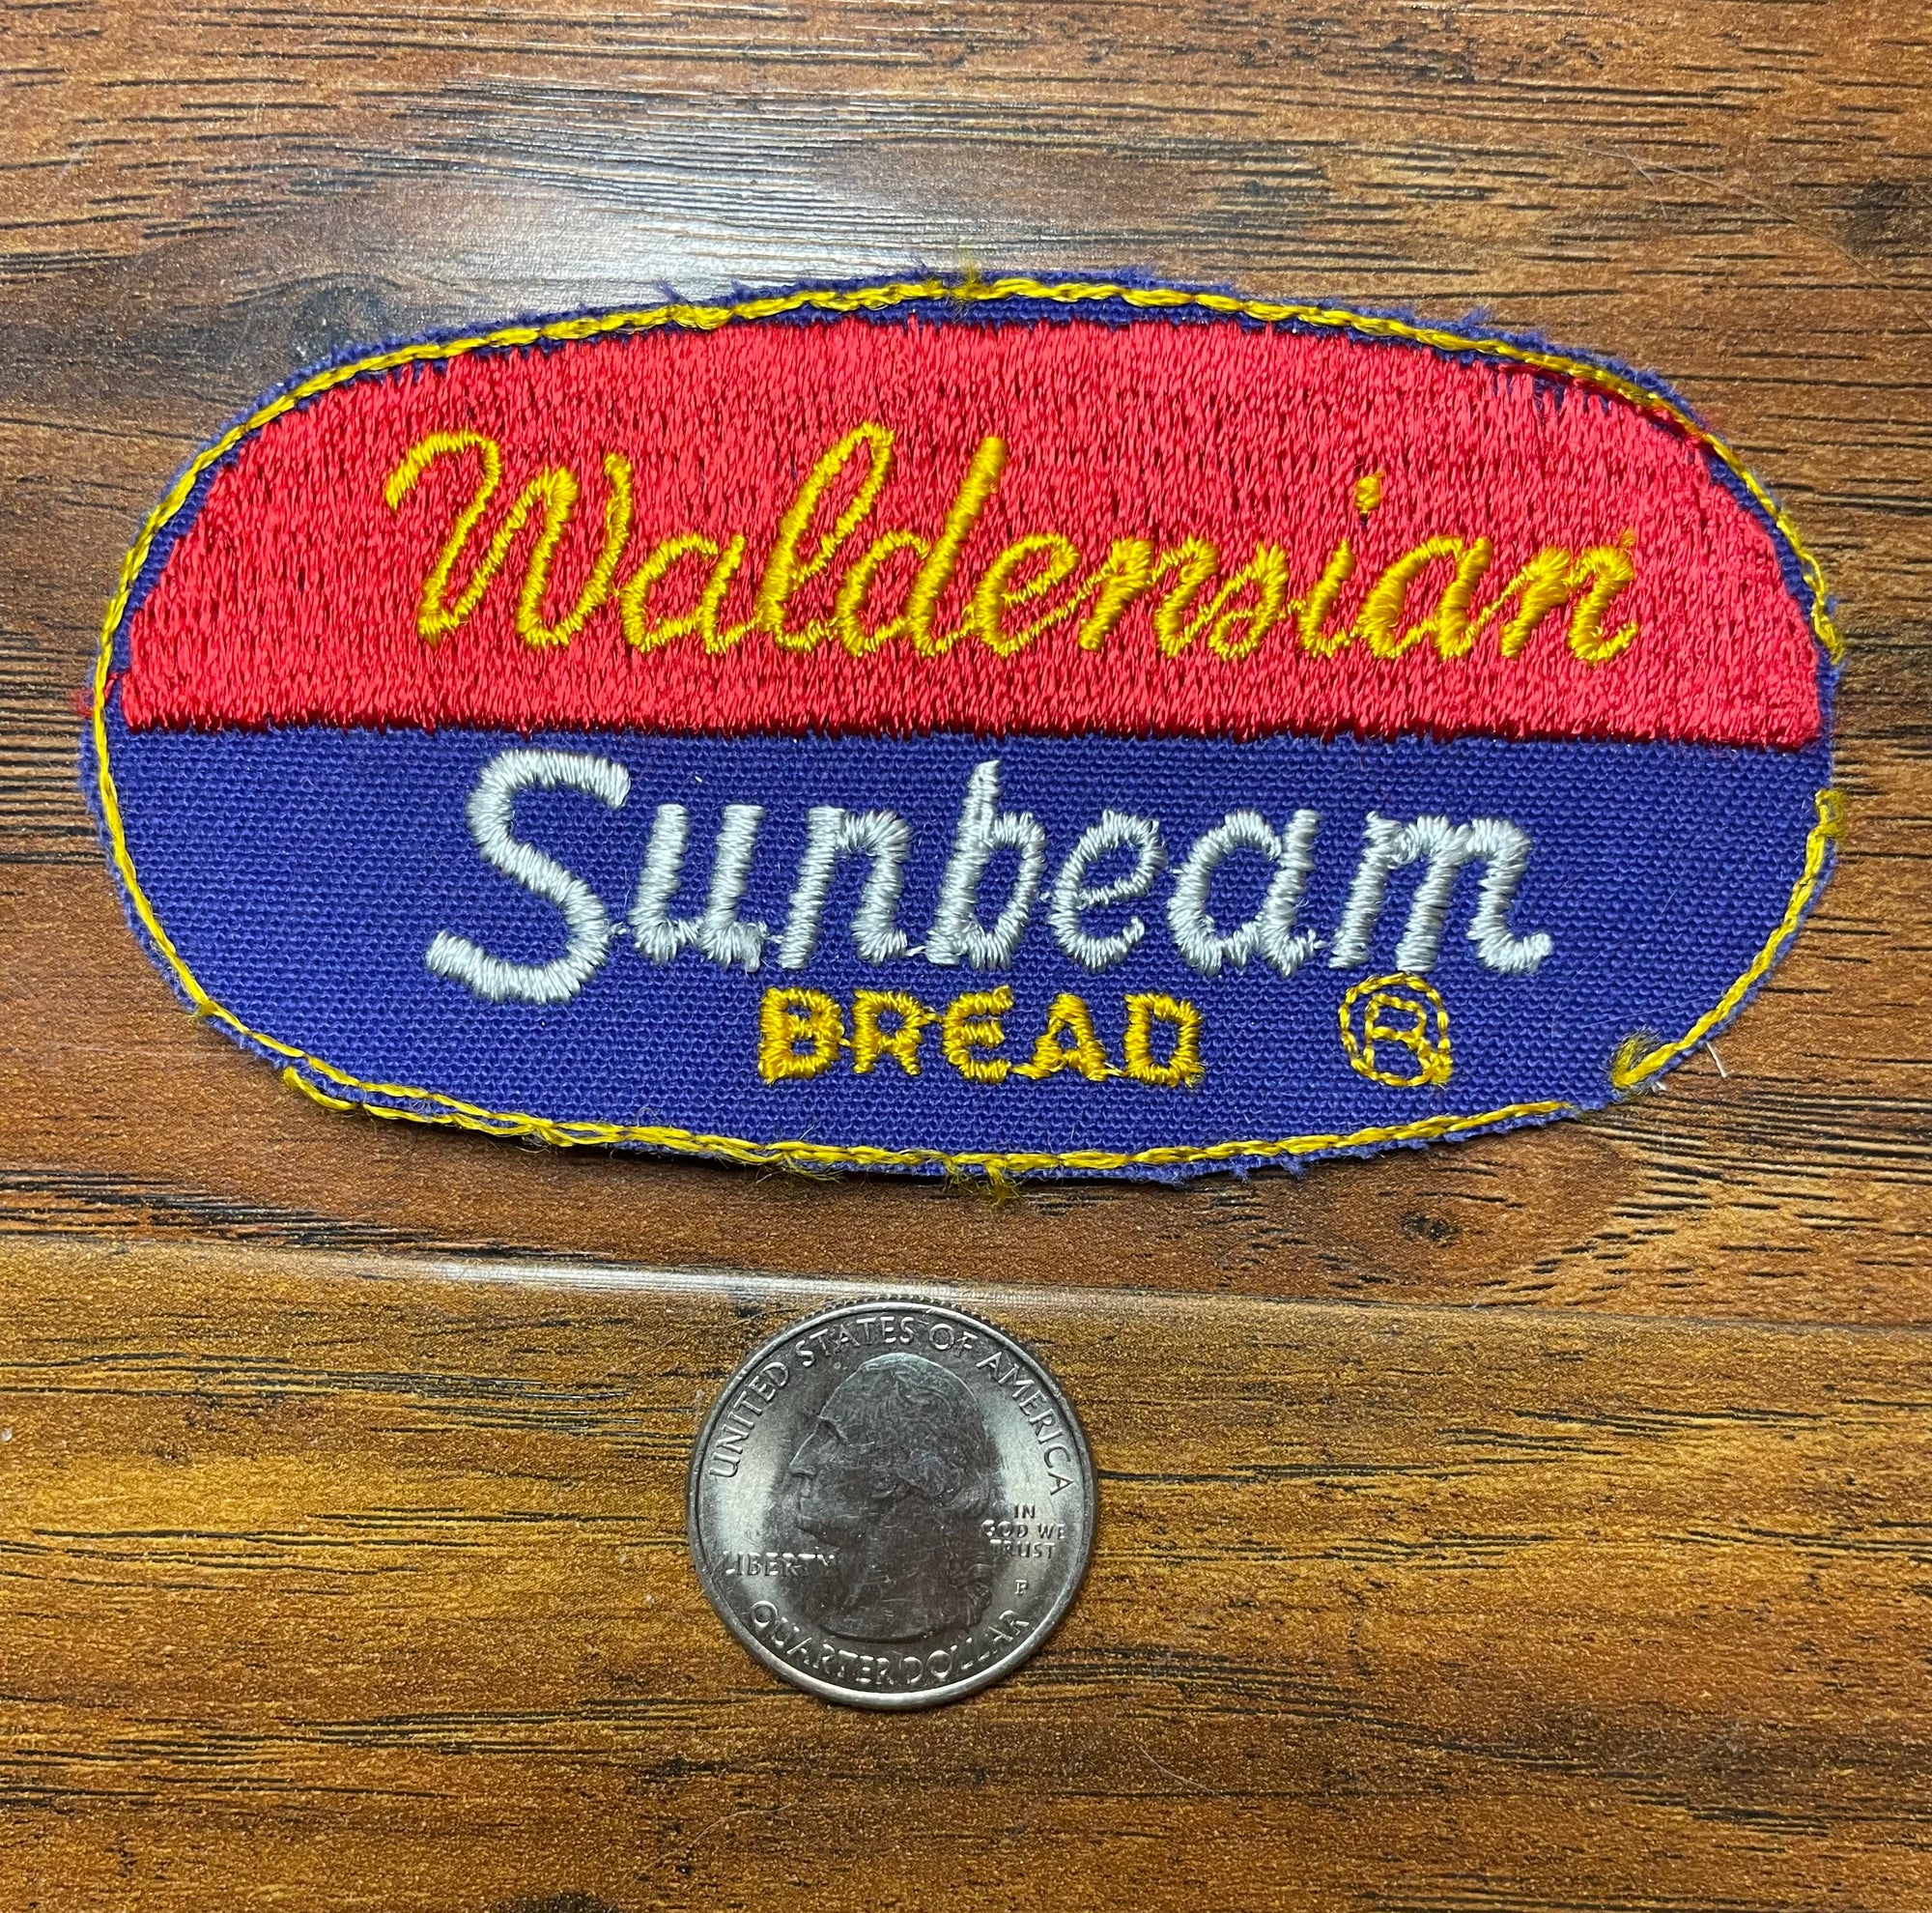 Vintage Waldensian Sunbeam Bread